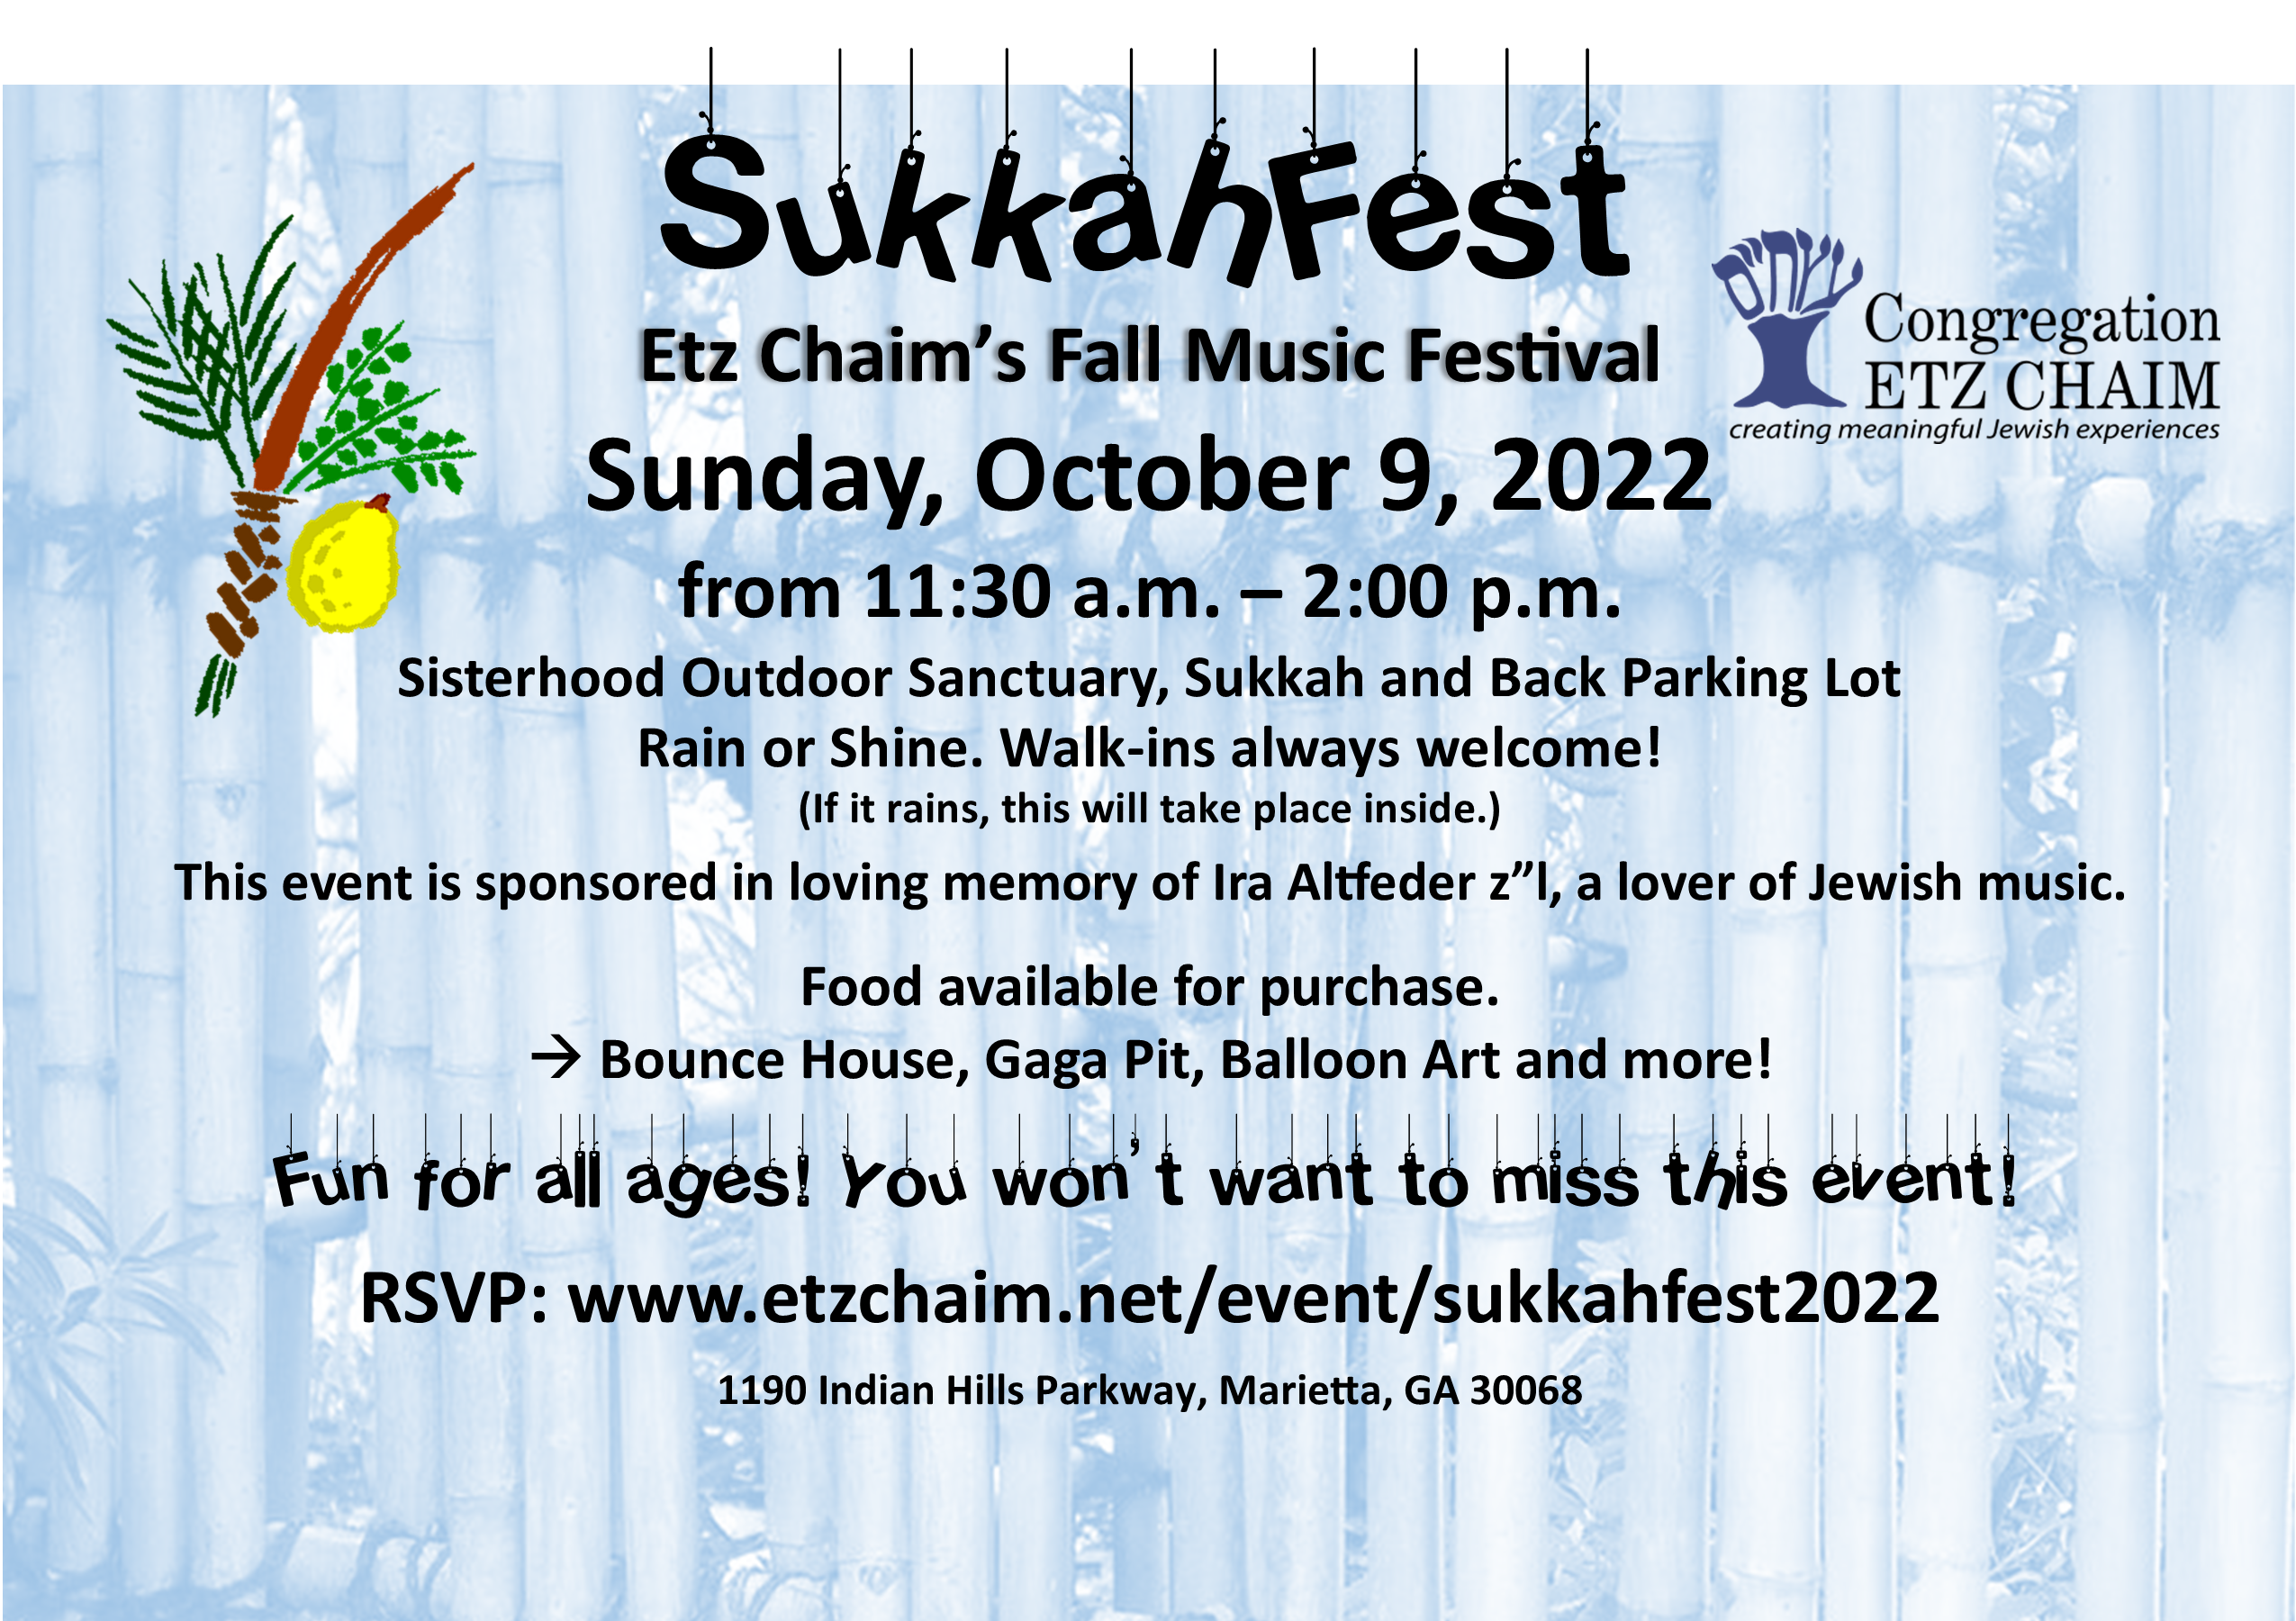 SukkahFest: Etz Chaim's Fall Music Festival